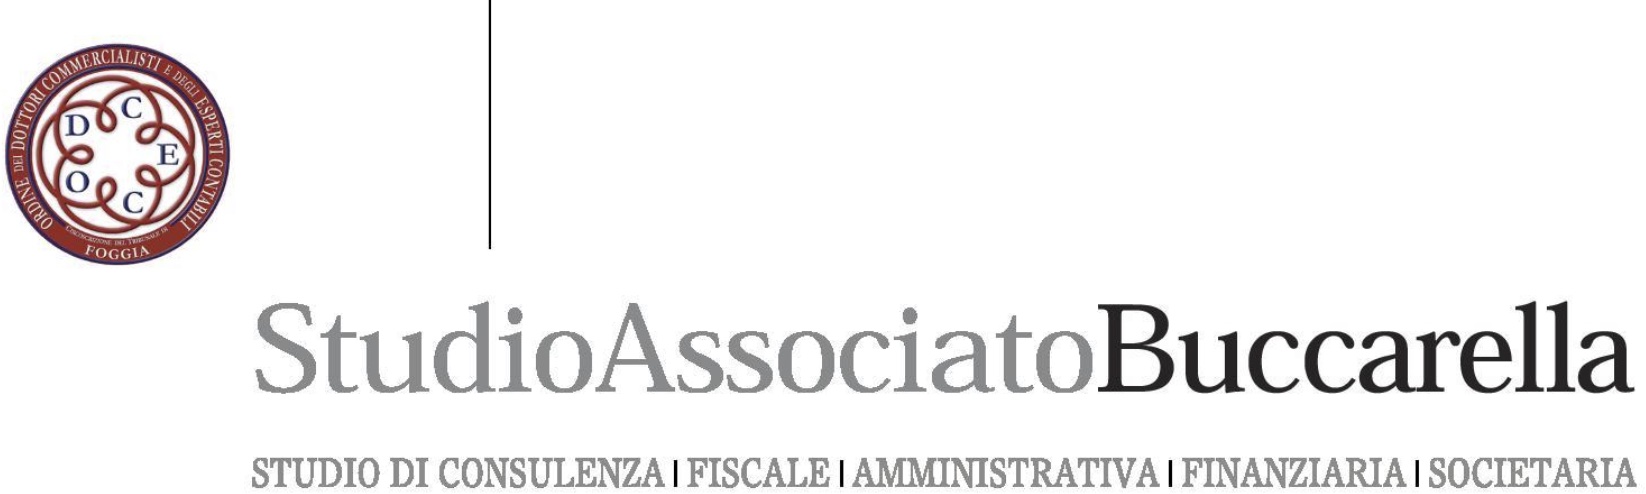 studio buccarella logo